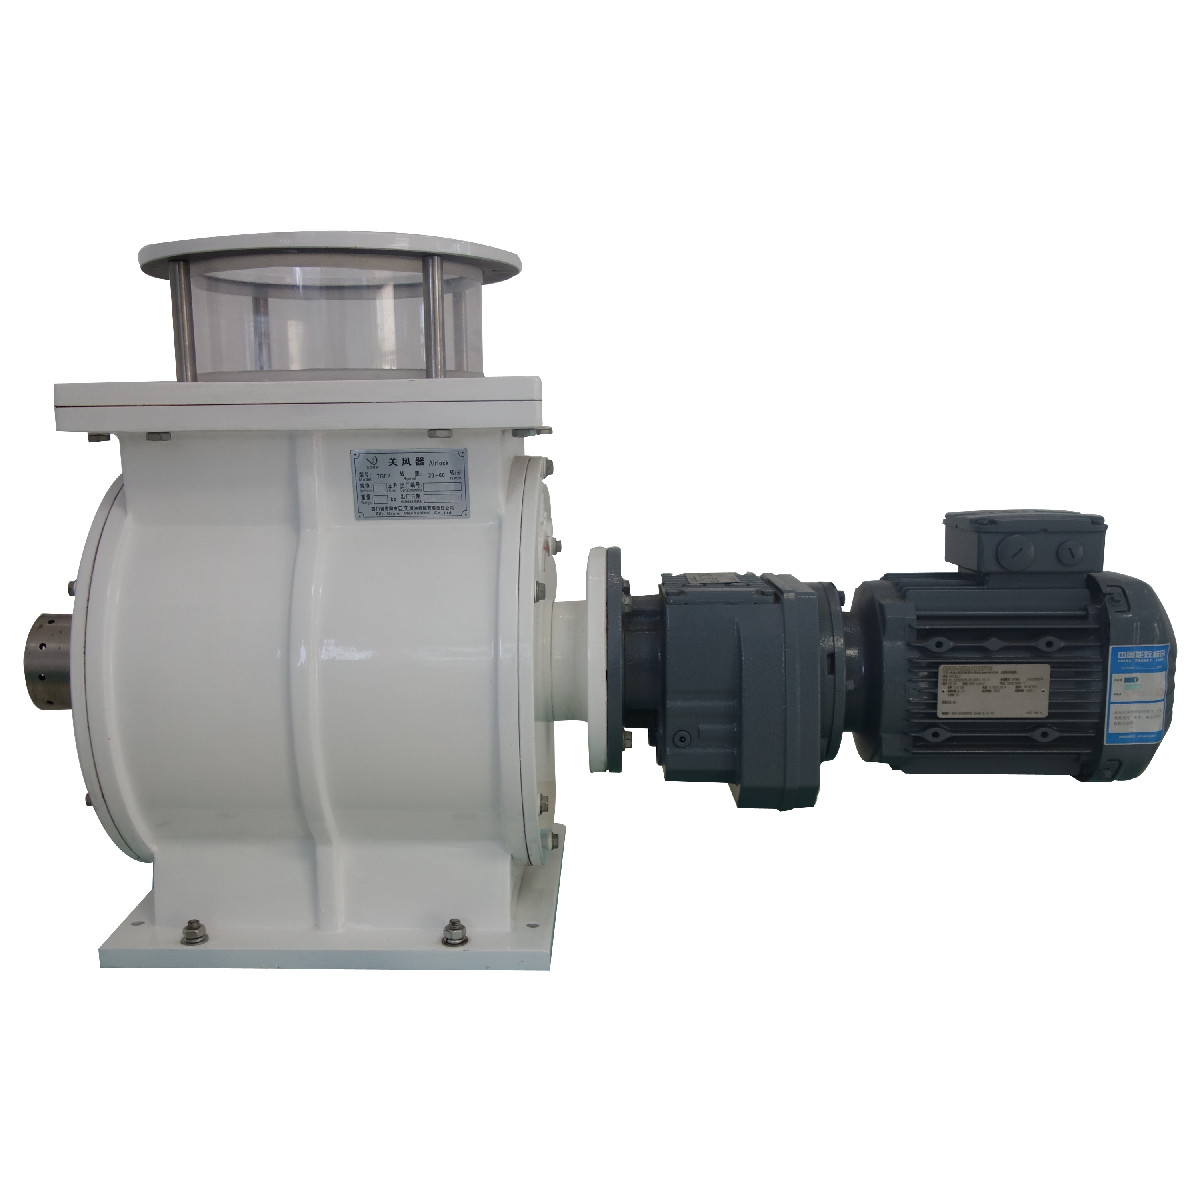 rotary airlock valve သည် pneumatic conveying system တွင် မည်သို့အလုပ်လုပ်သနည်း။